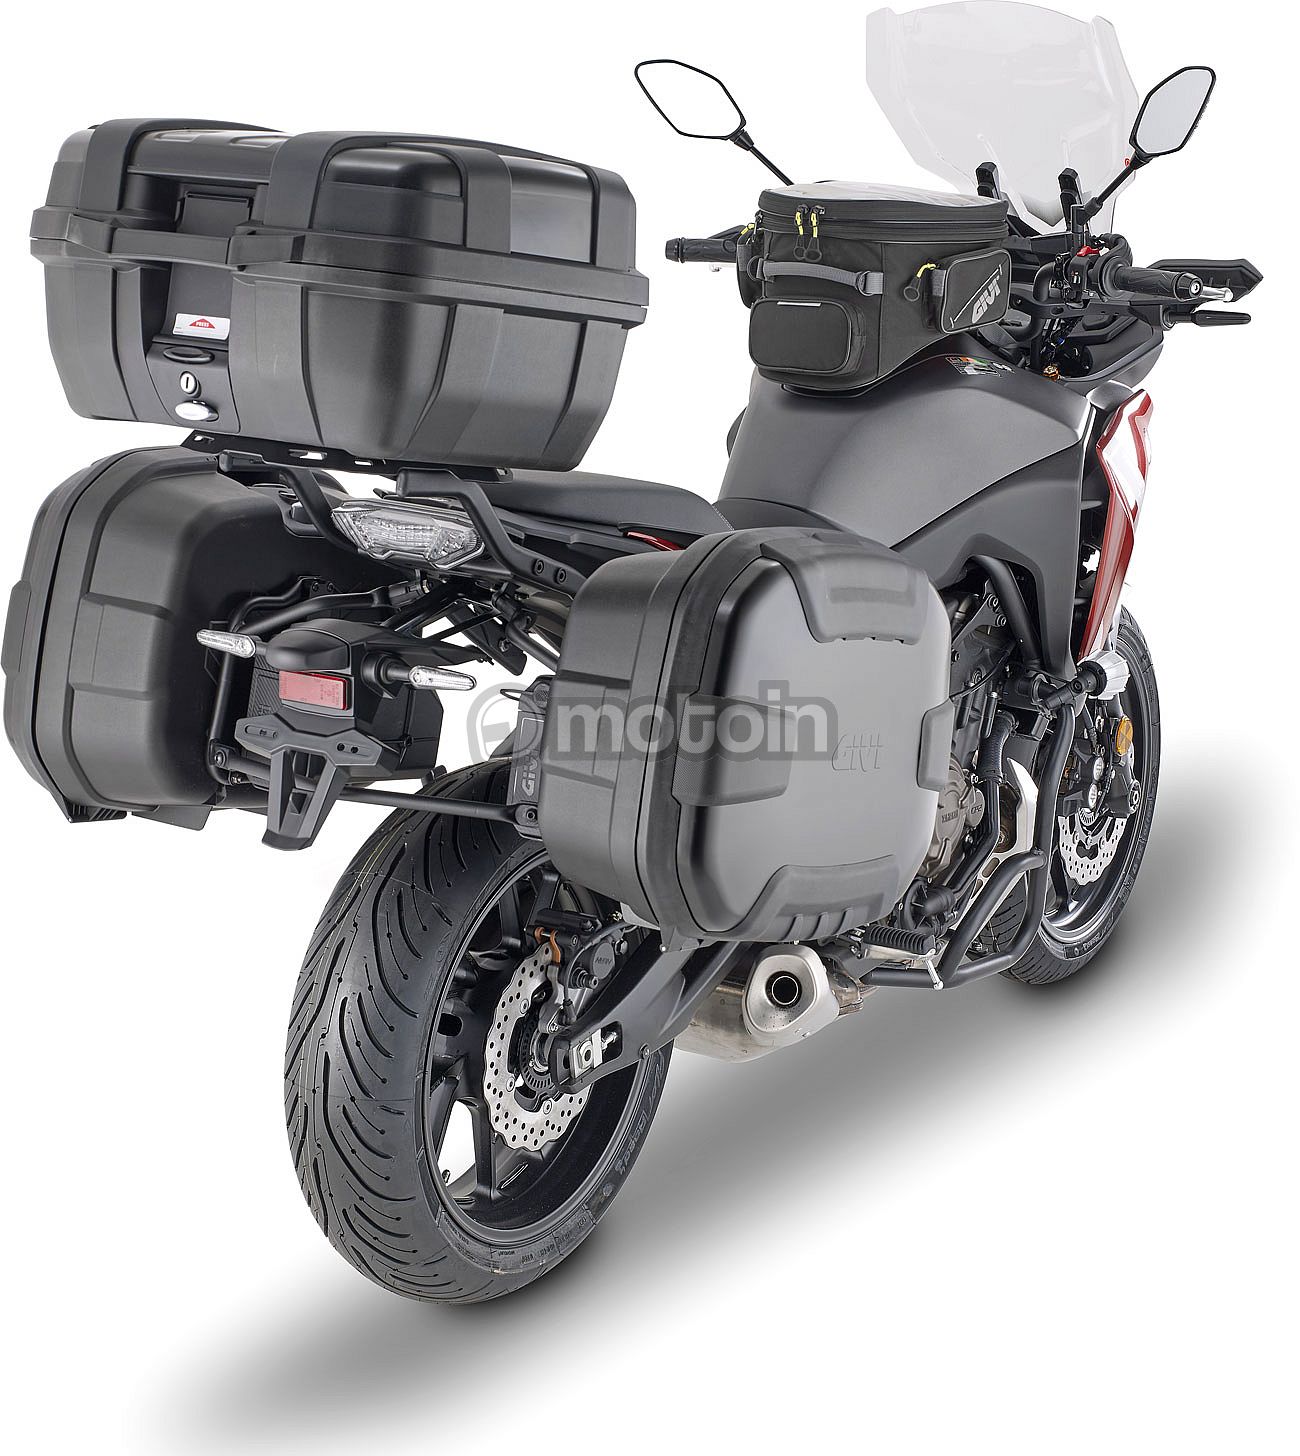 Givi Yamaha Tracer 700, Monokey/Retro-Fit lateral